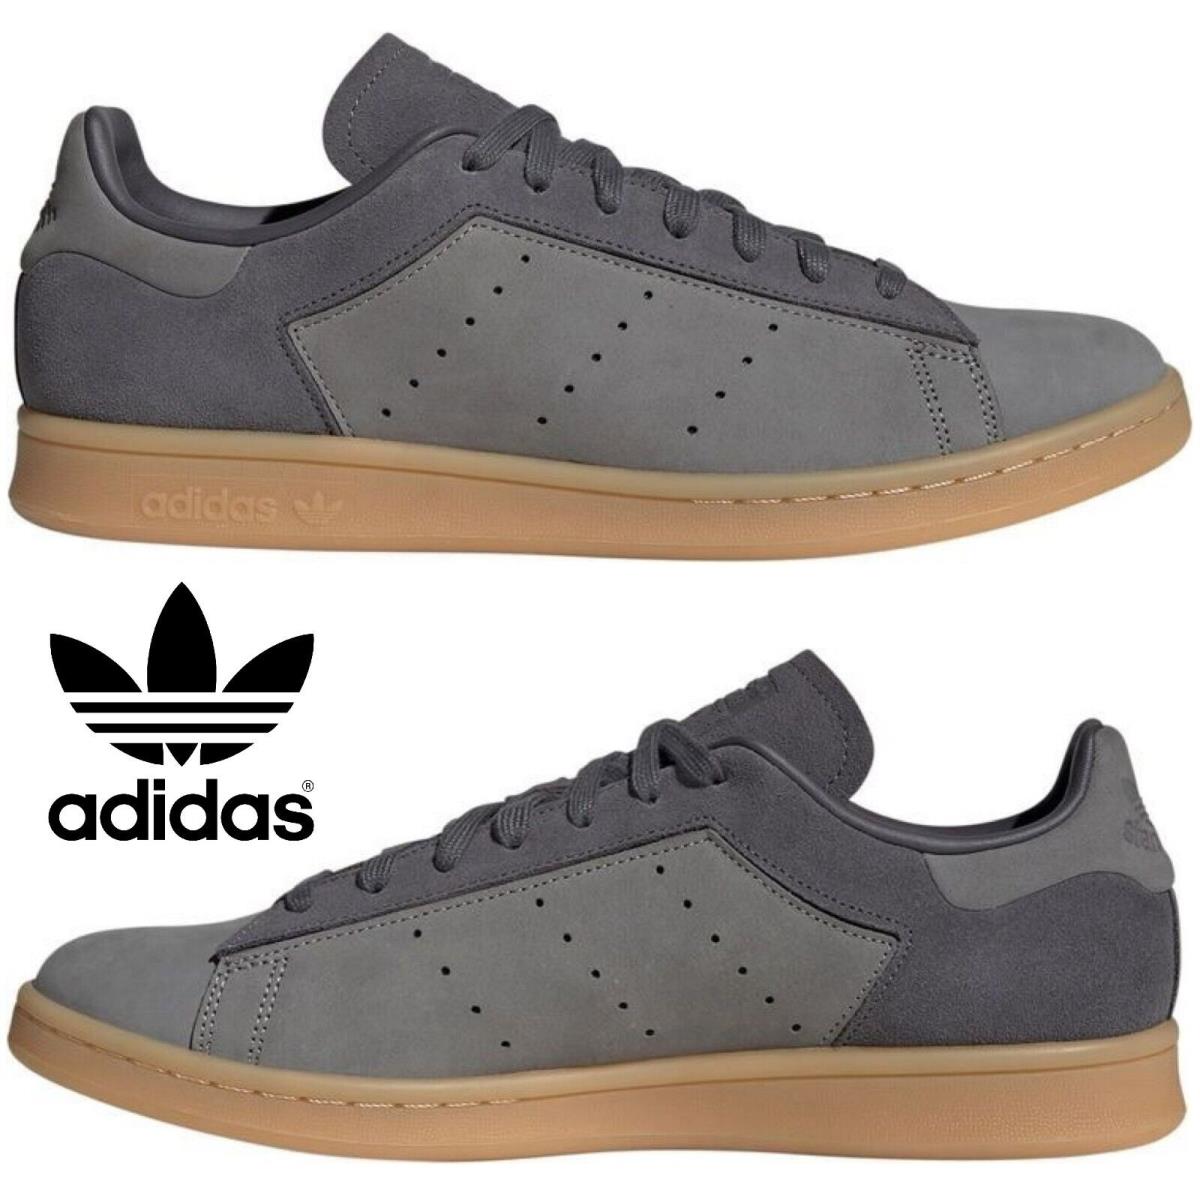 Adidas Originals Stan Smith Men`s Sneakers Comfort Sport Casual Shoes Gray Brown - Gray , Grey/Gum Manufacturer